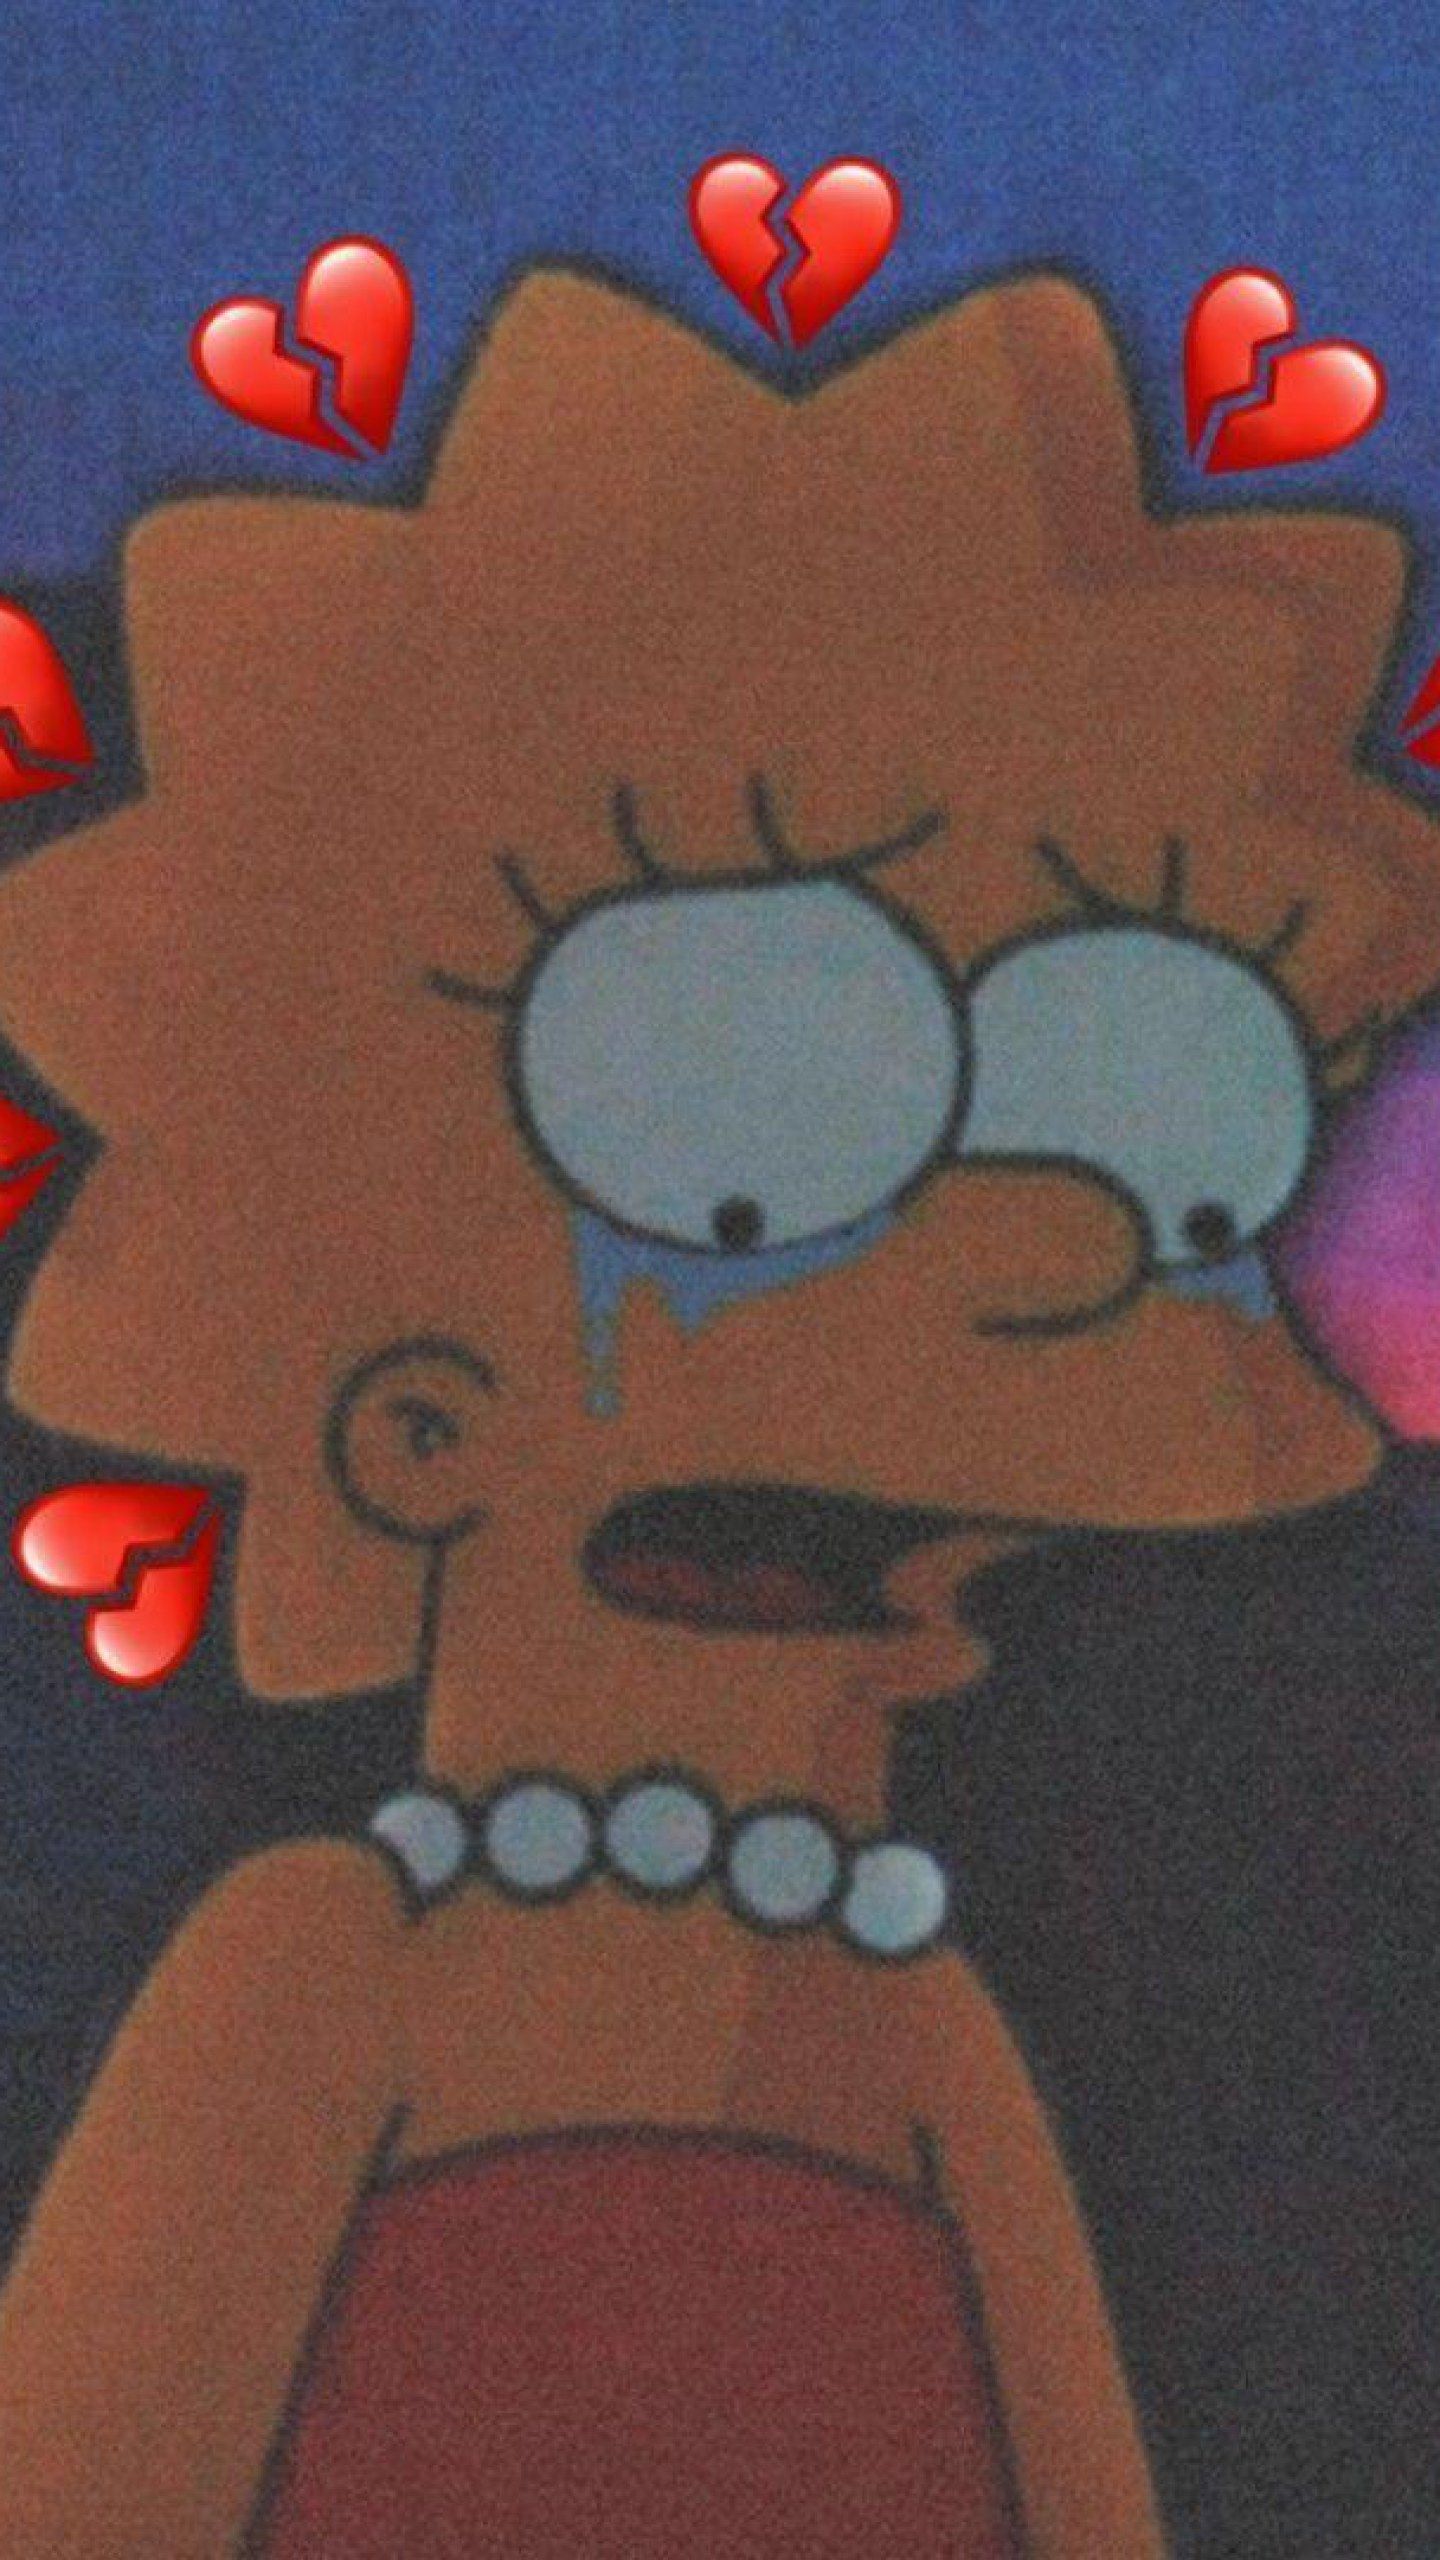 Simpsons Girl Wallpaper